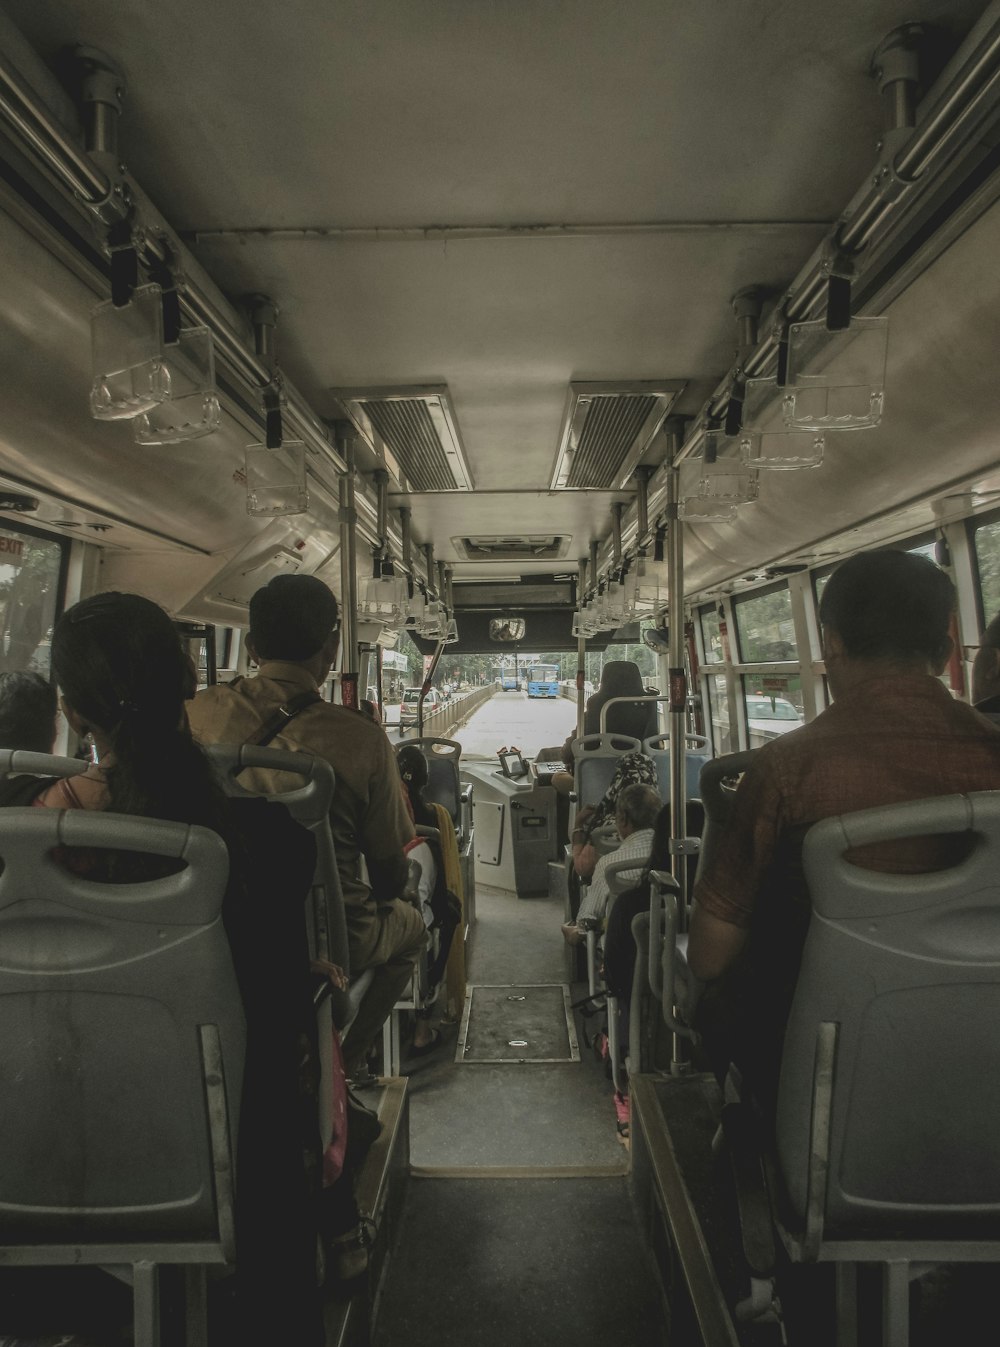 people sitting inside bus